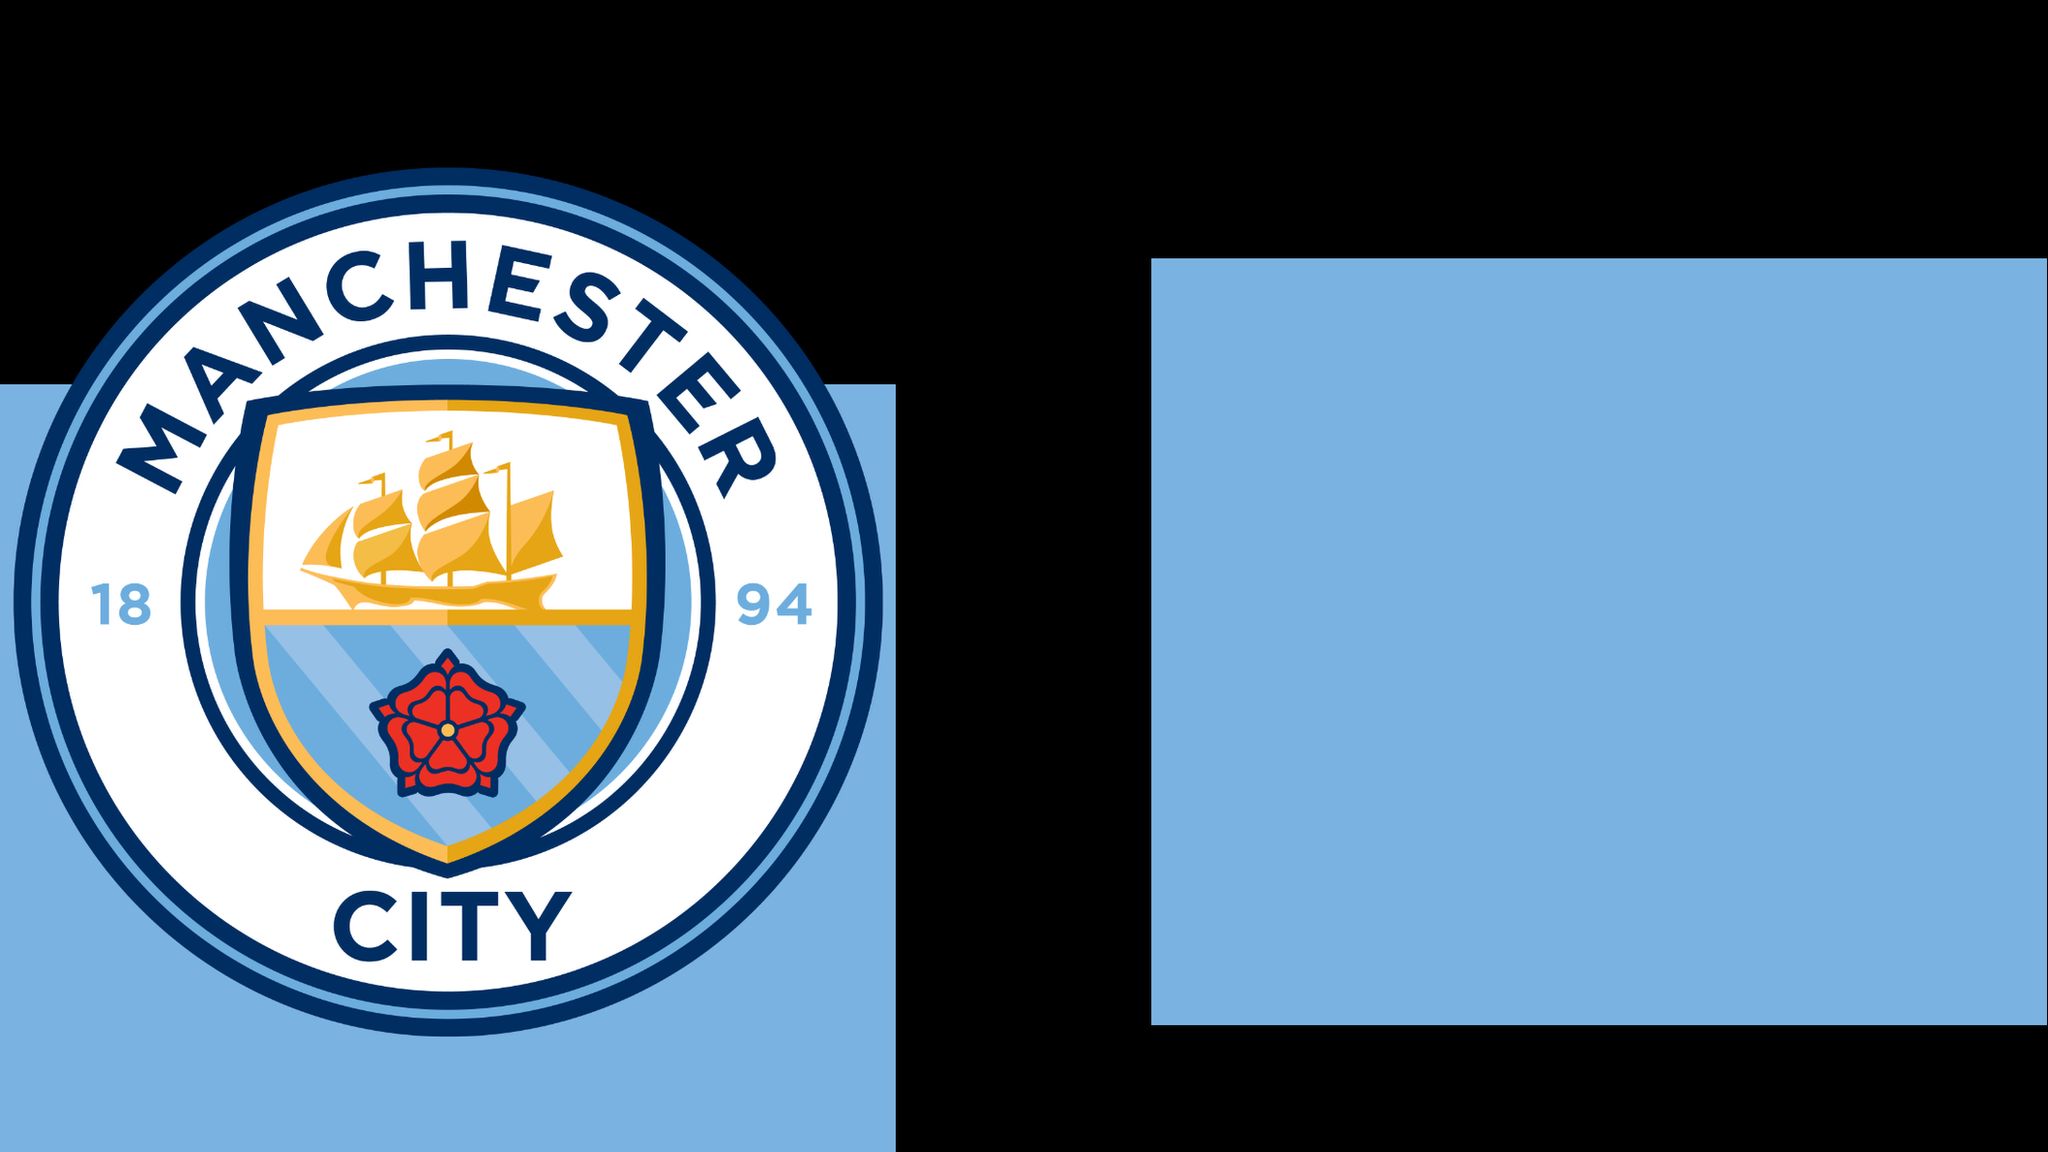 Manchester City club badge